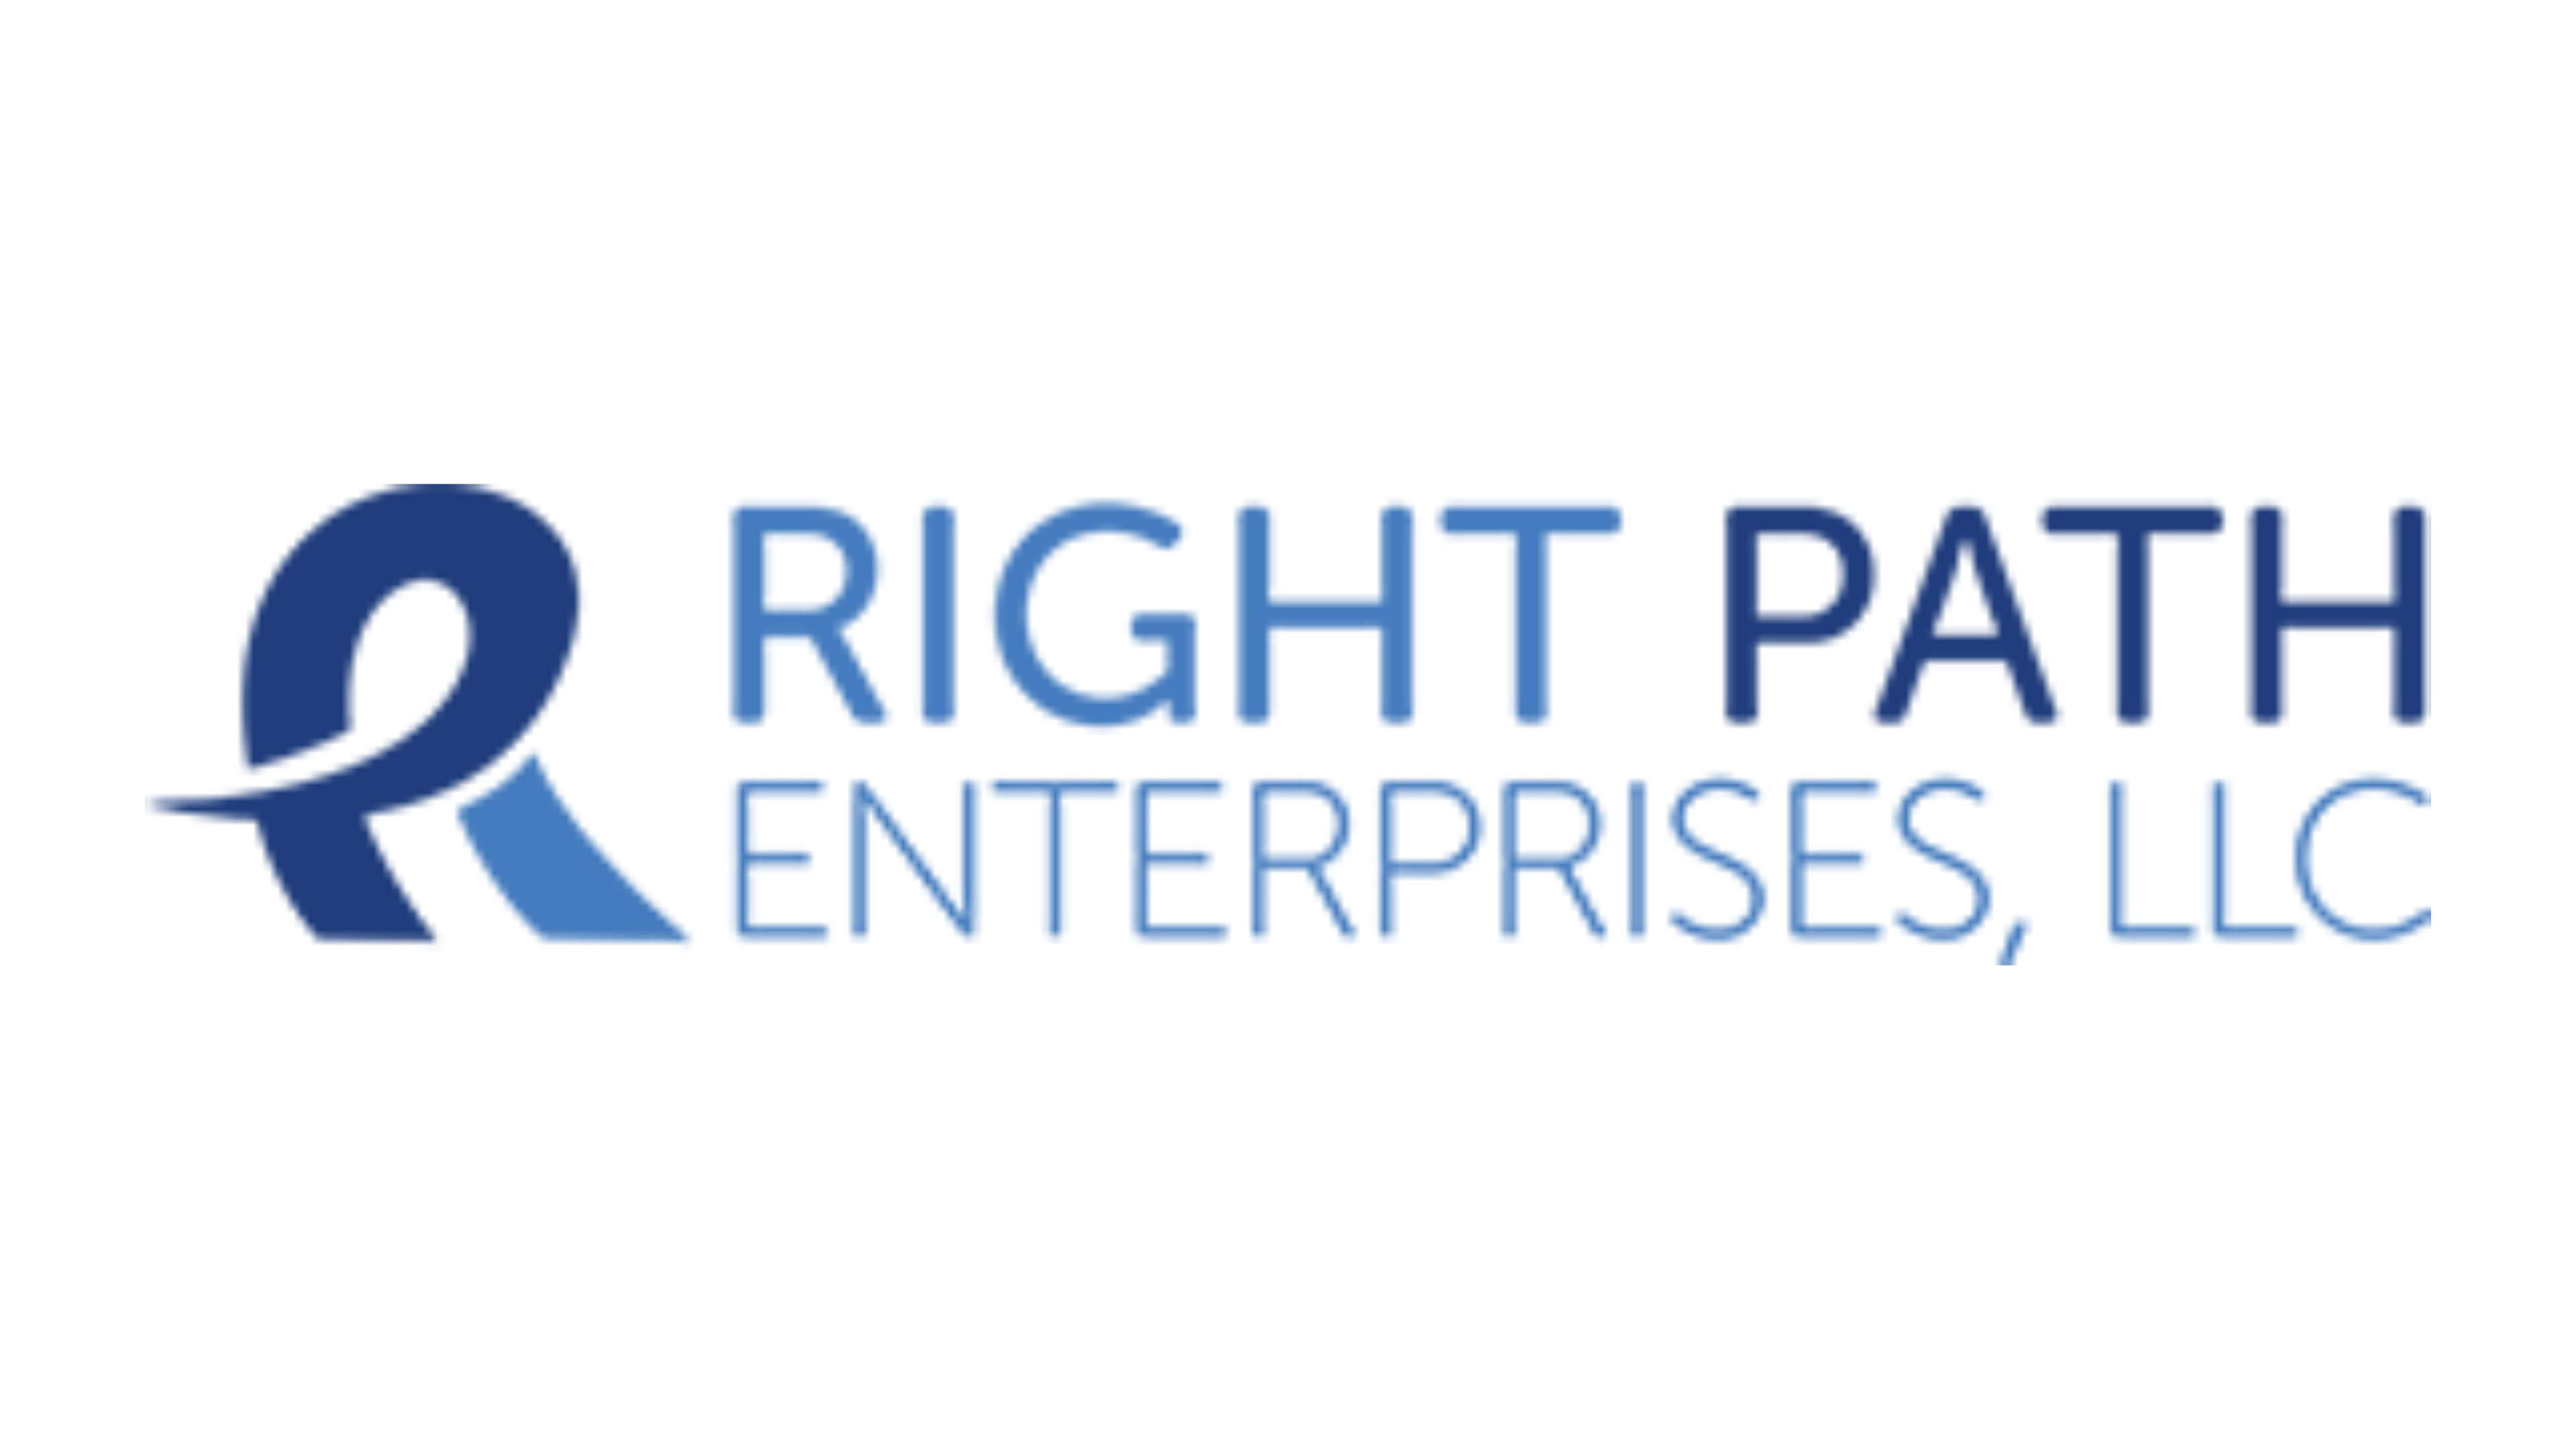 Right Path Enterprises